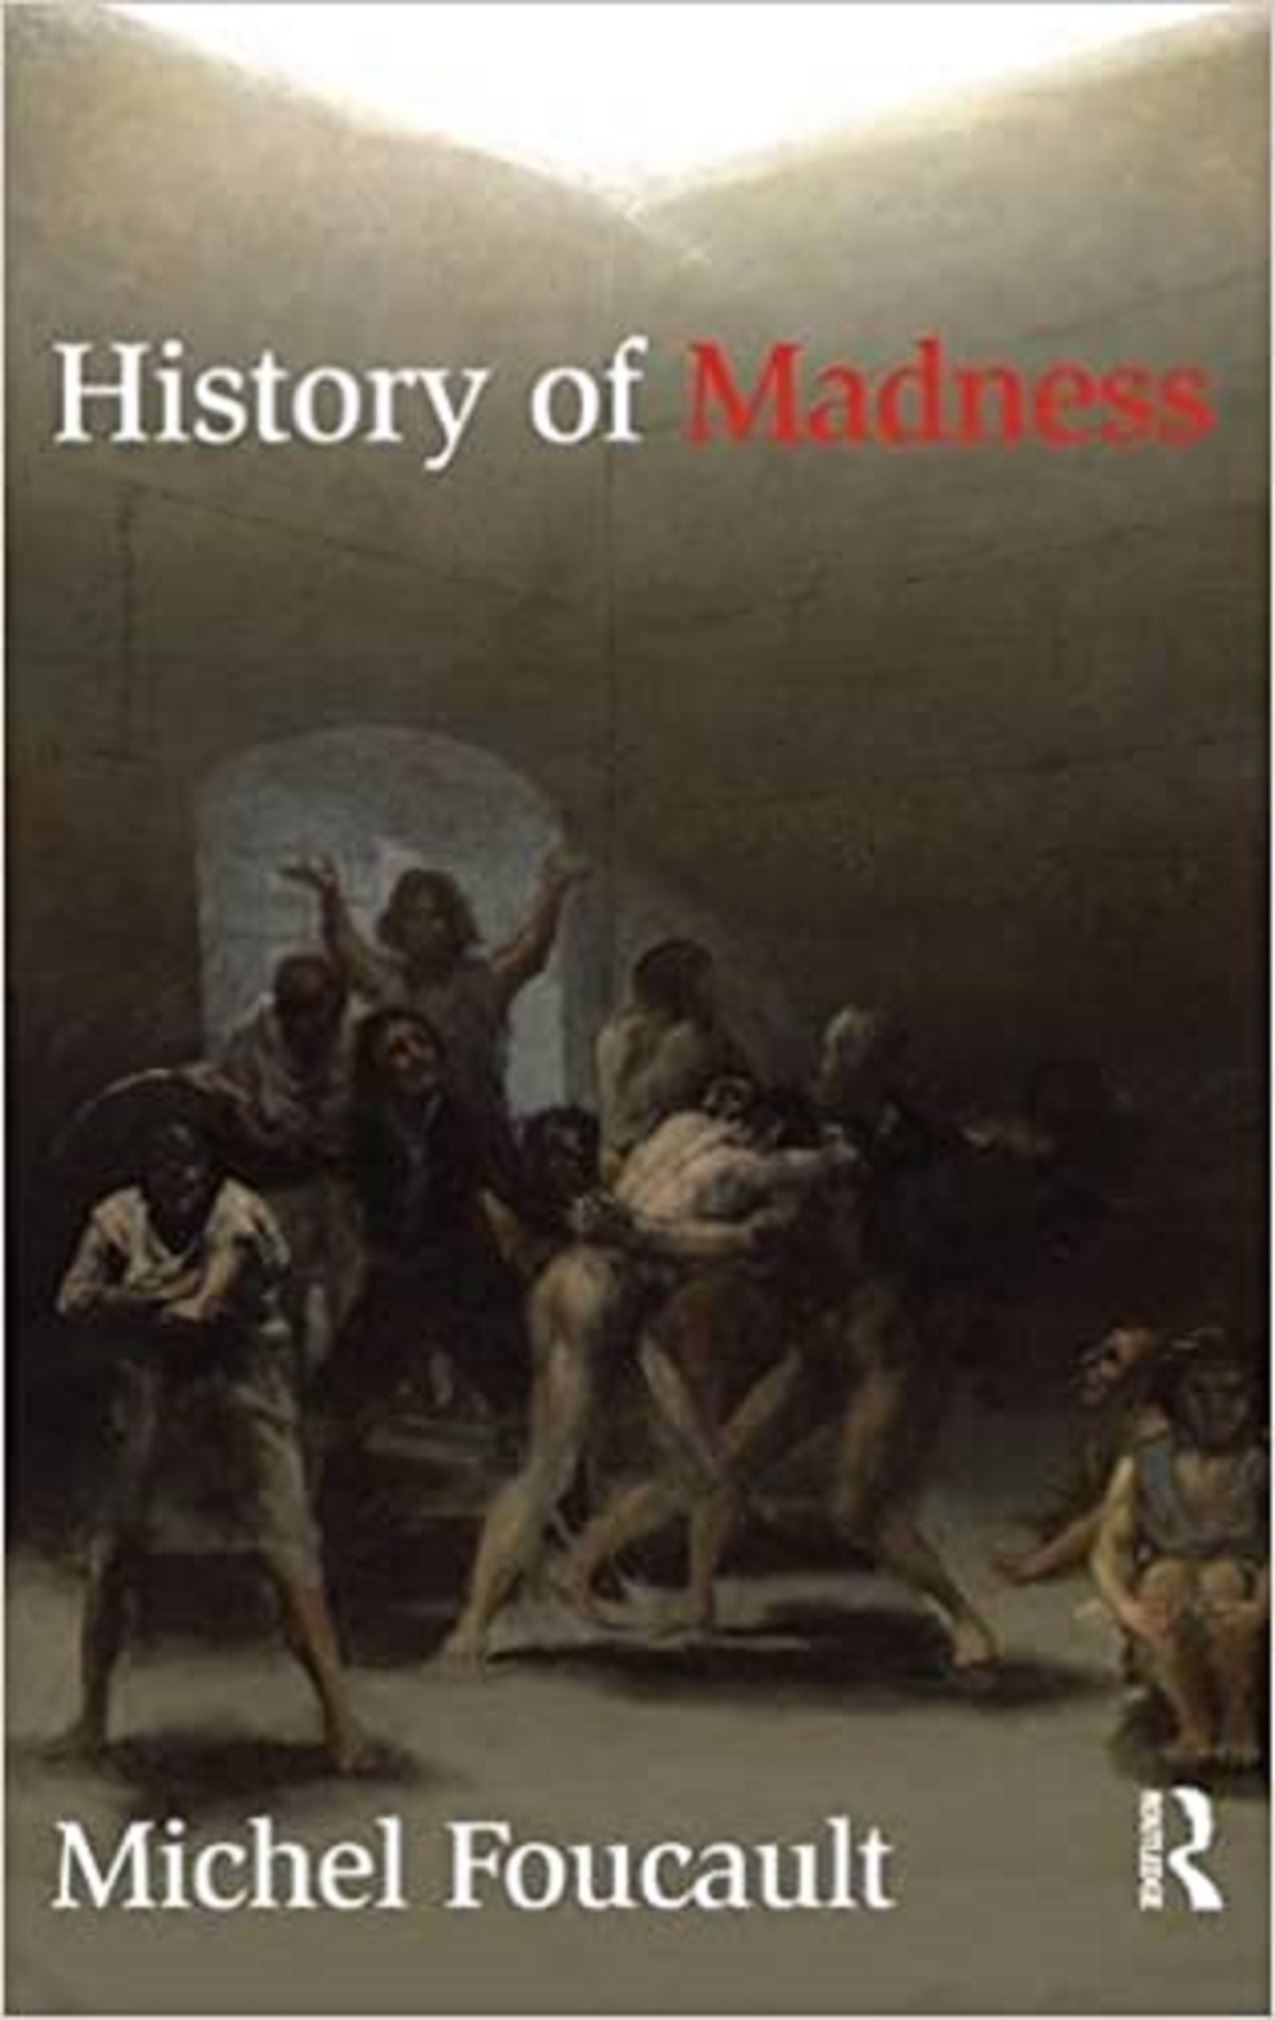 History of Madness | Michel Foucault image5